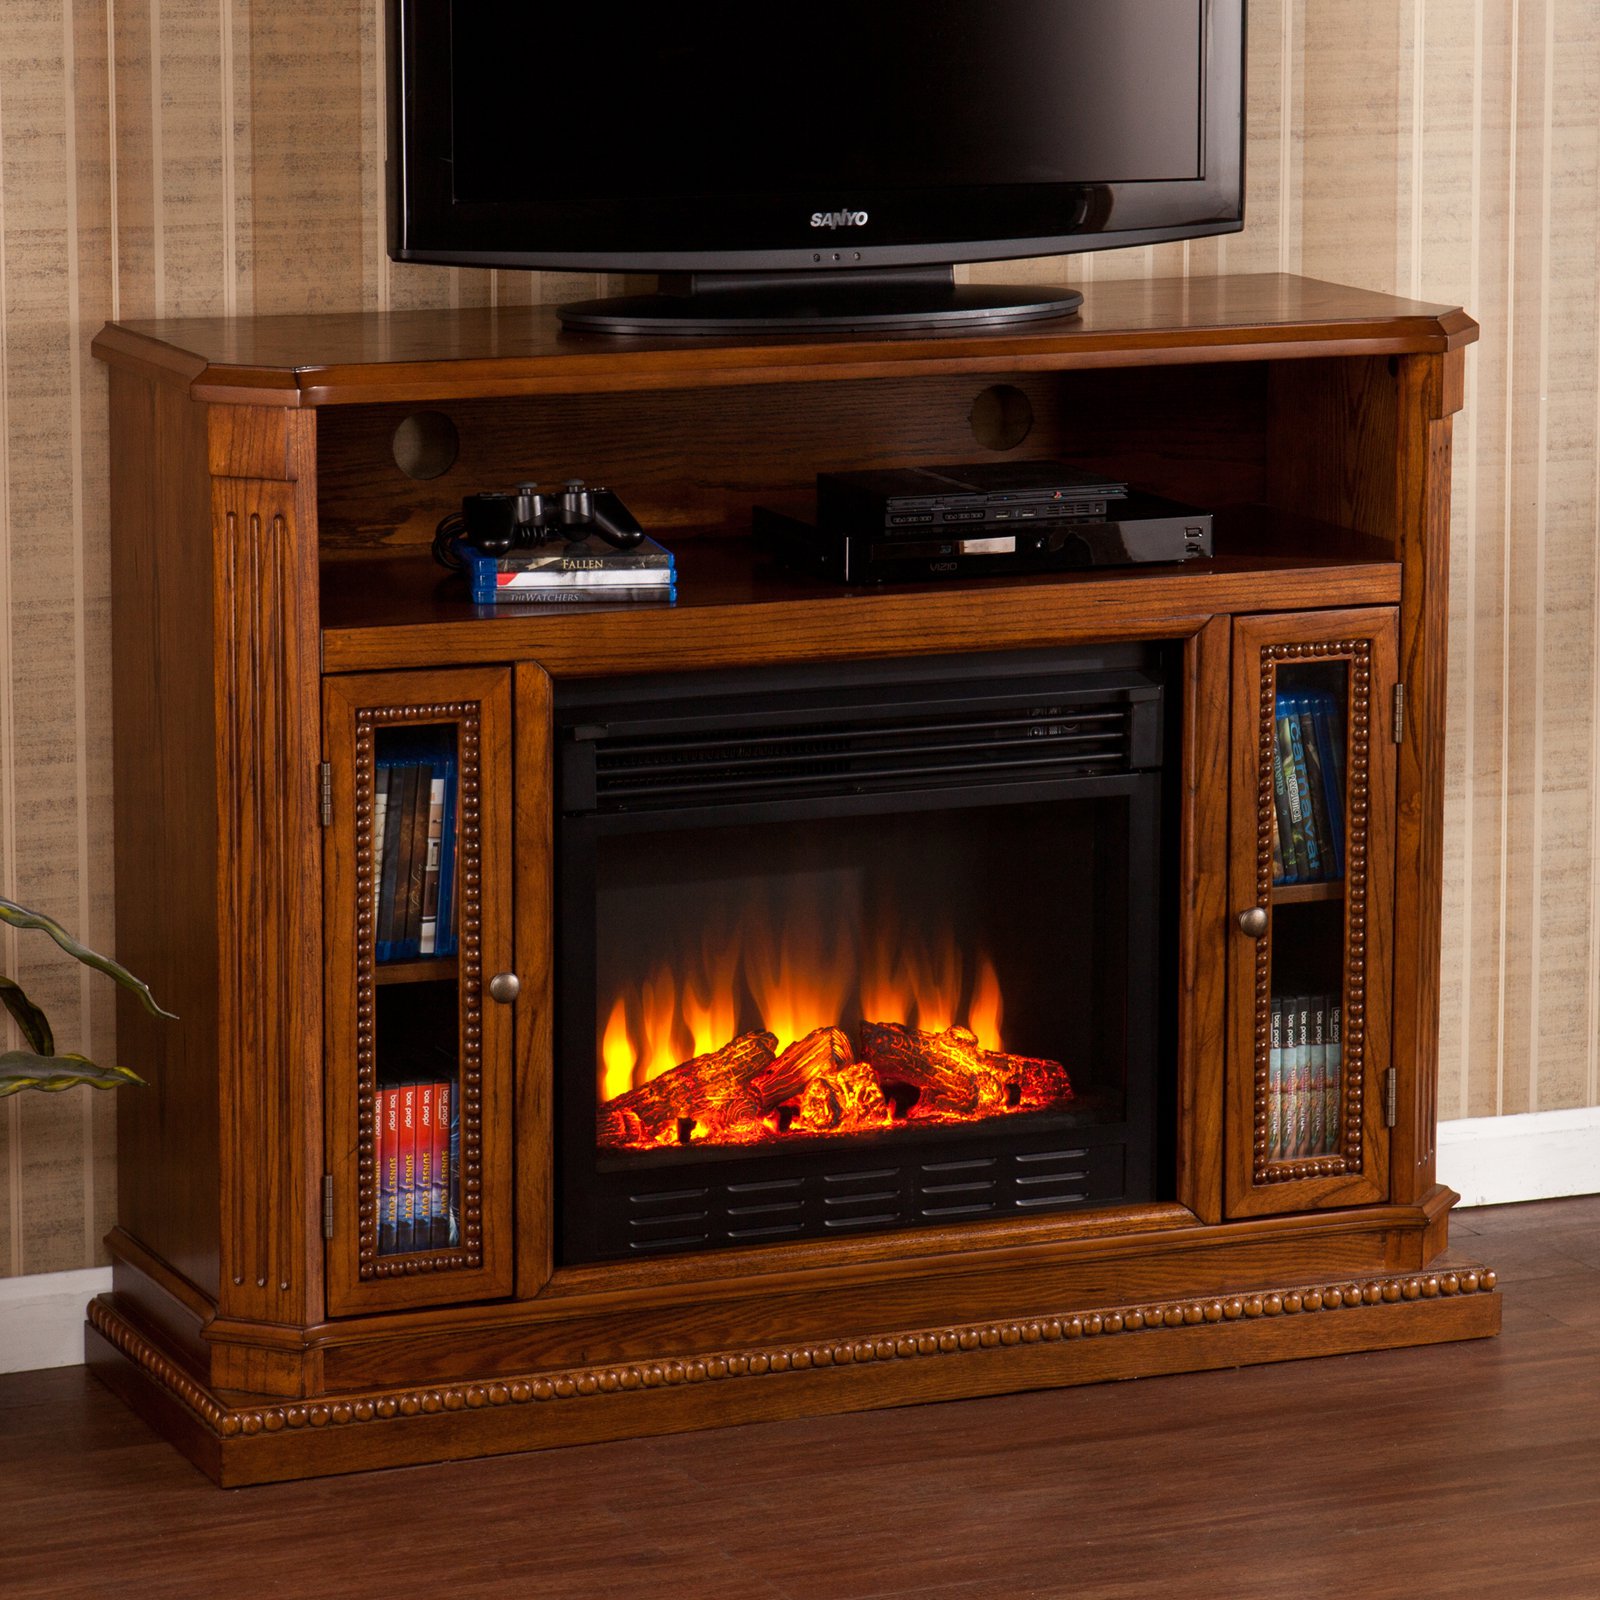 Fireplace Tv Stand Big Lots Best Of southern Enterprises atkinson Rich Brown Oak Electric